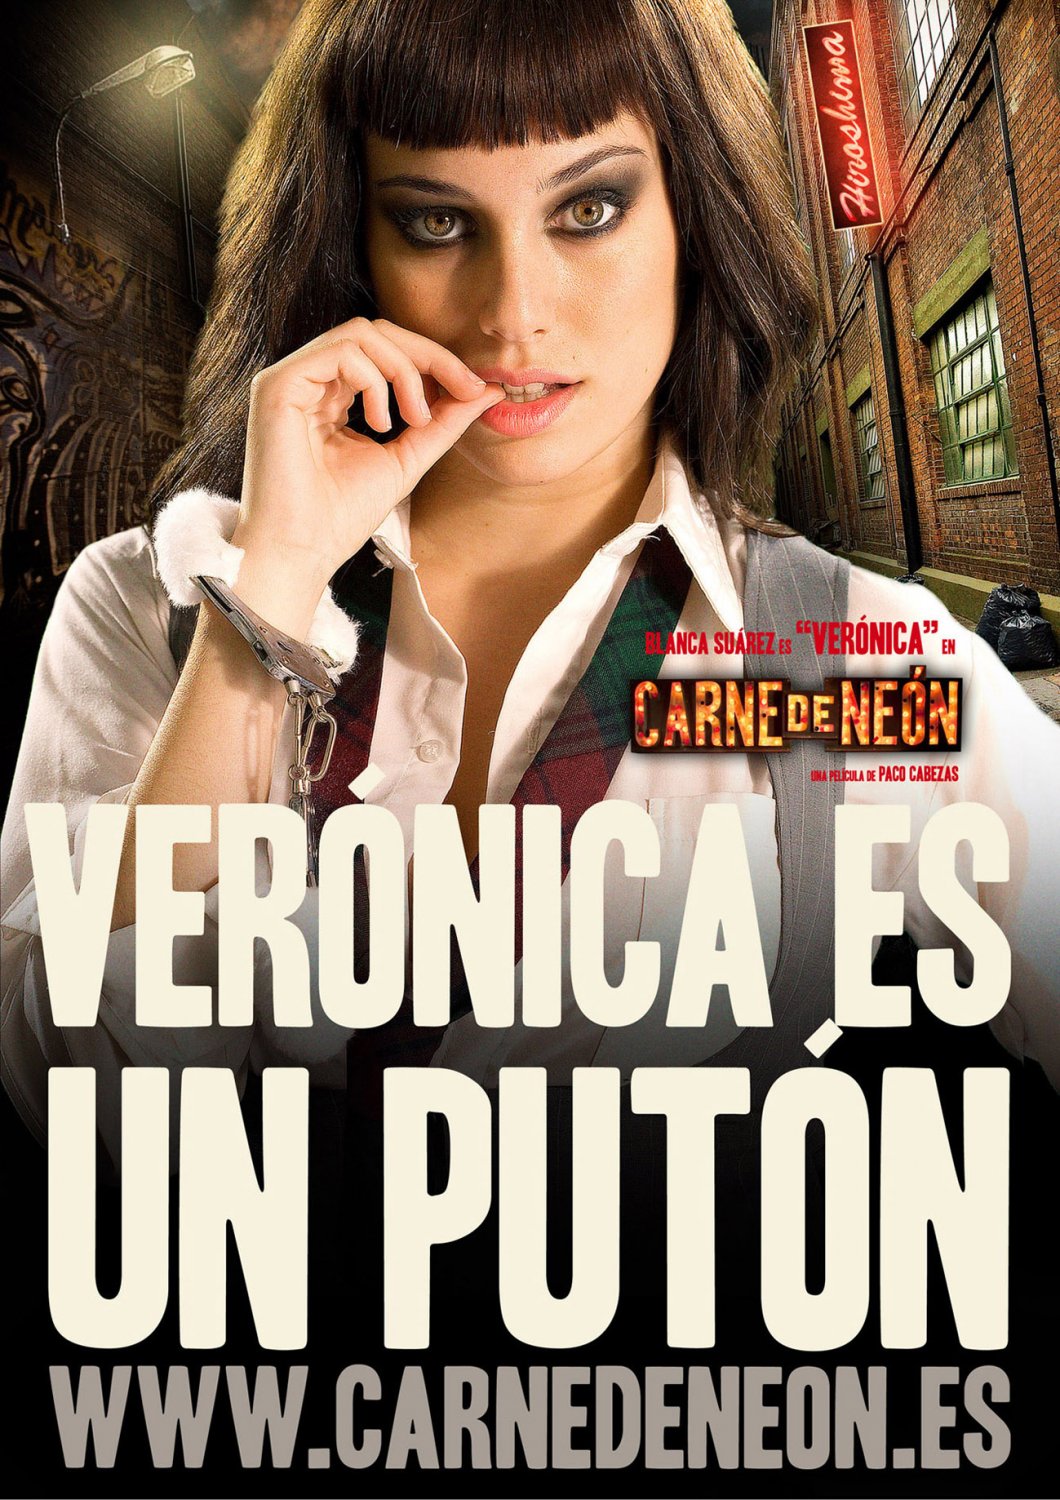 Extra Large Movie Poster Image for Carne de neón (#3 of 5)